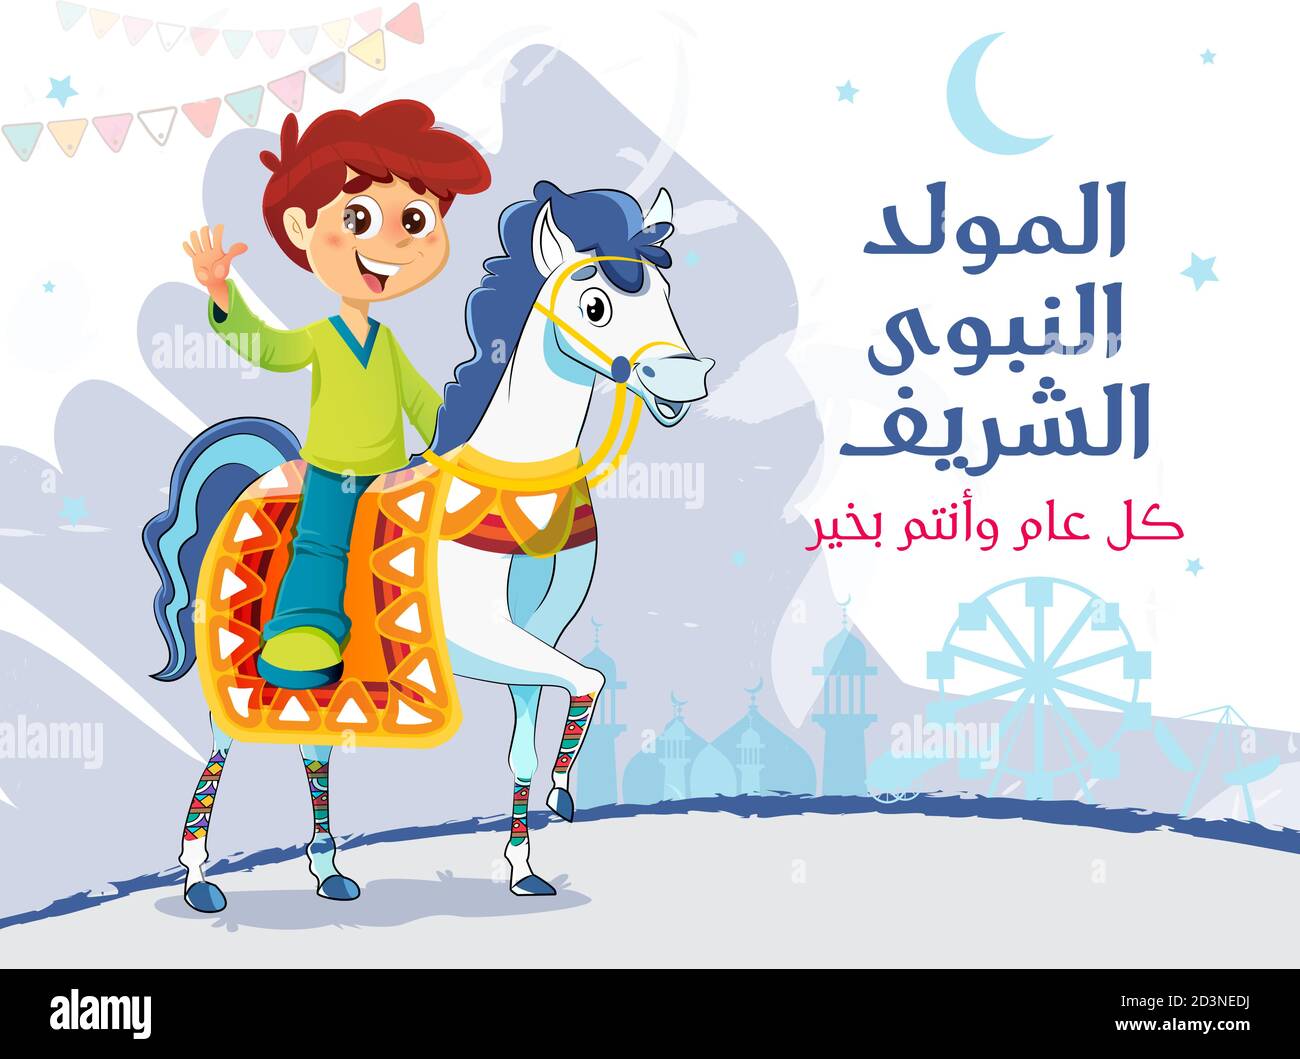 Traditional Islamic Greeting Card of Happy Prophet Muhammad’s Birthday, Islamic Celebration of Al Mawlid Al Nabawi - Translation: Happy Holiday of Pro Stock Vector